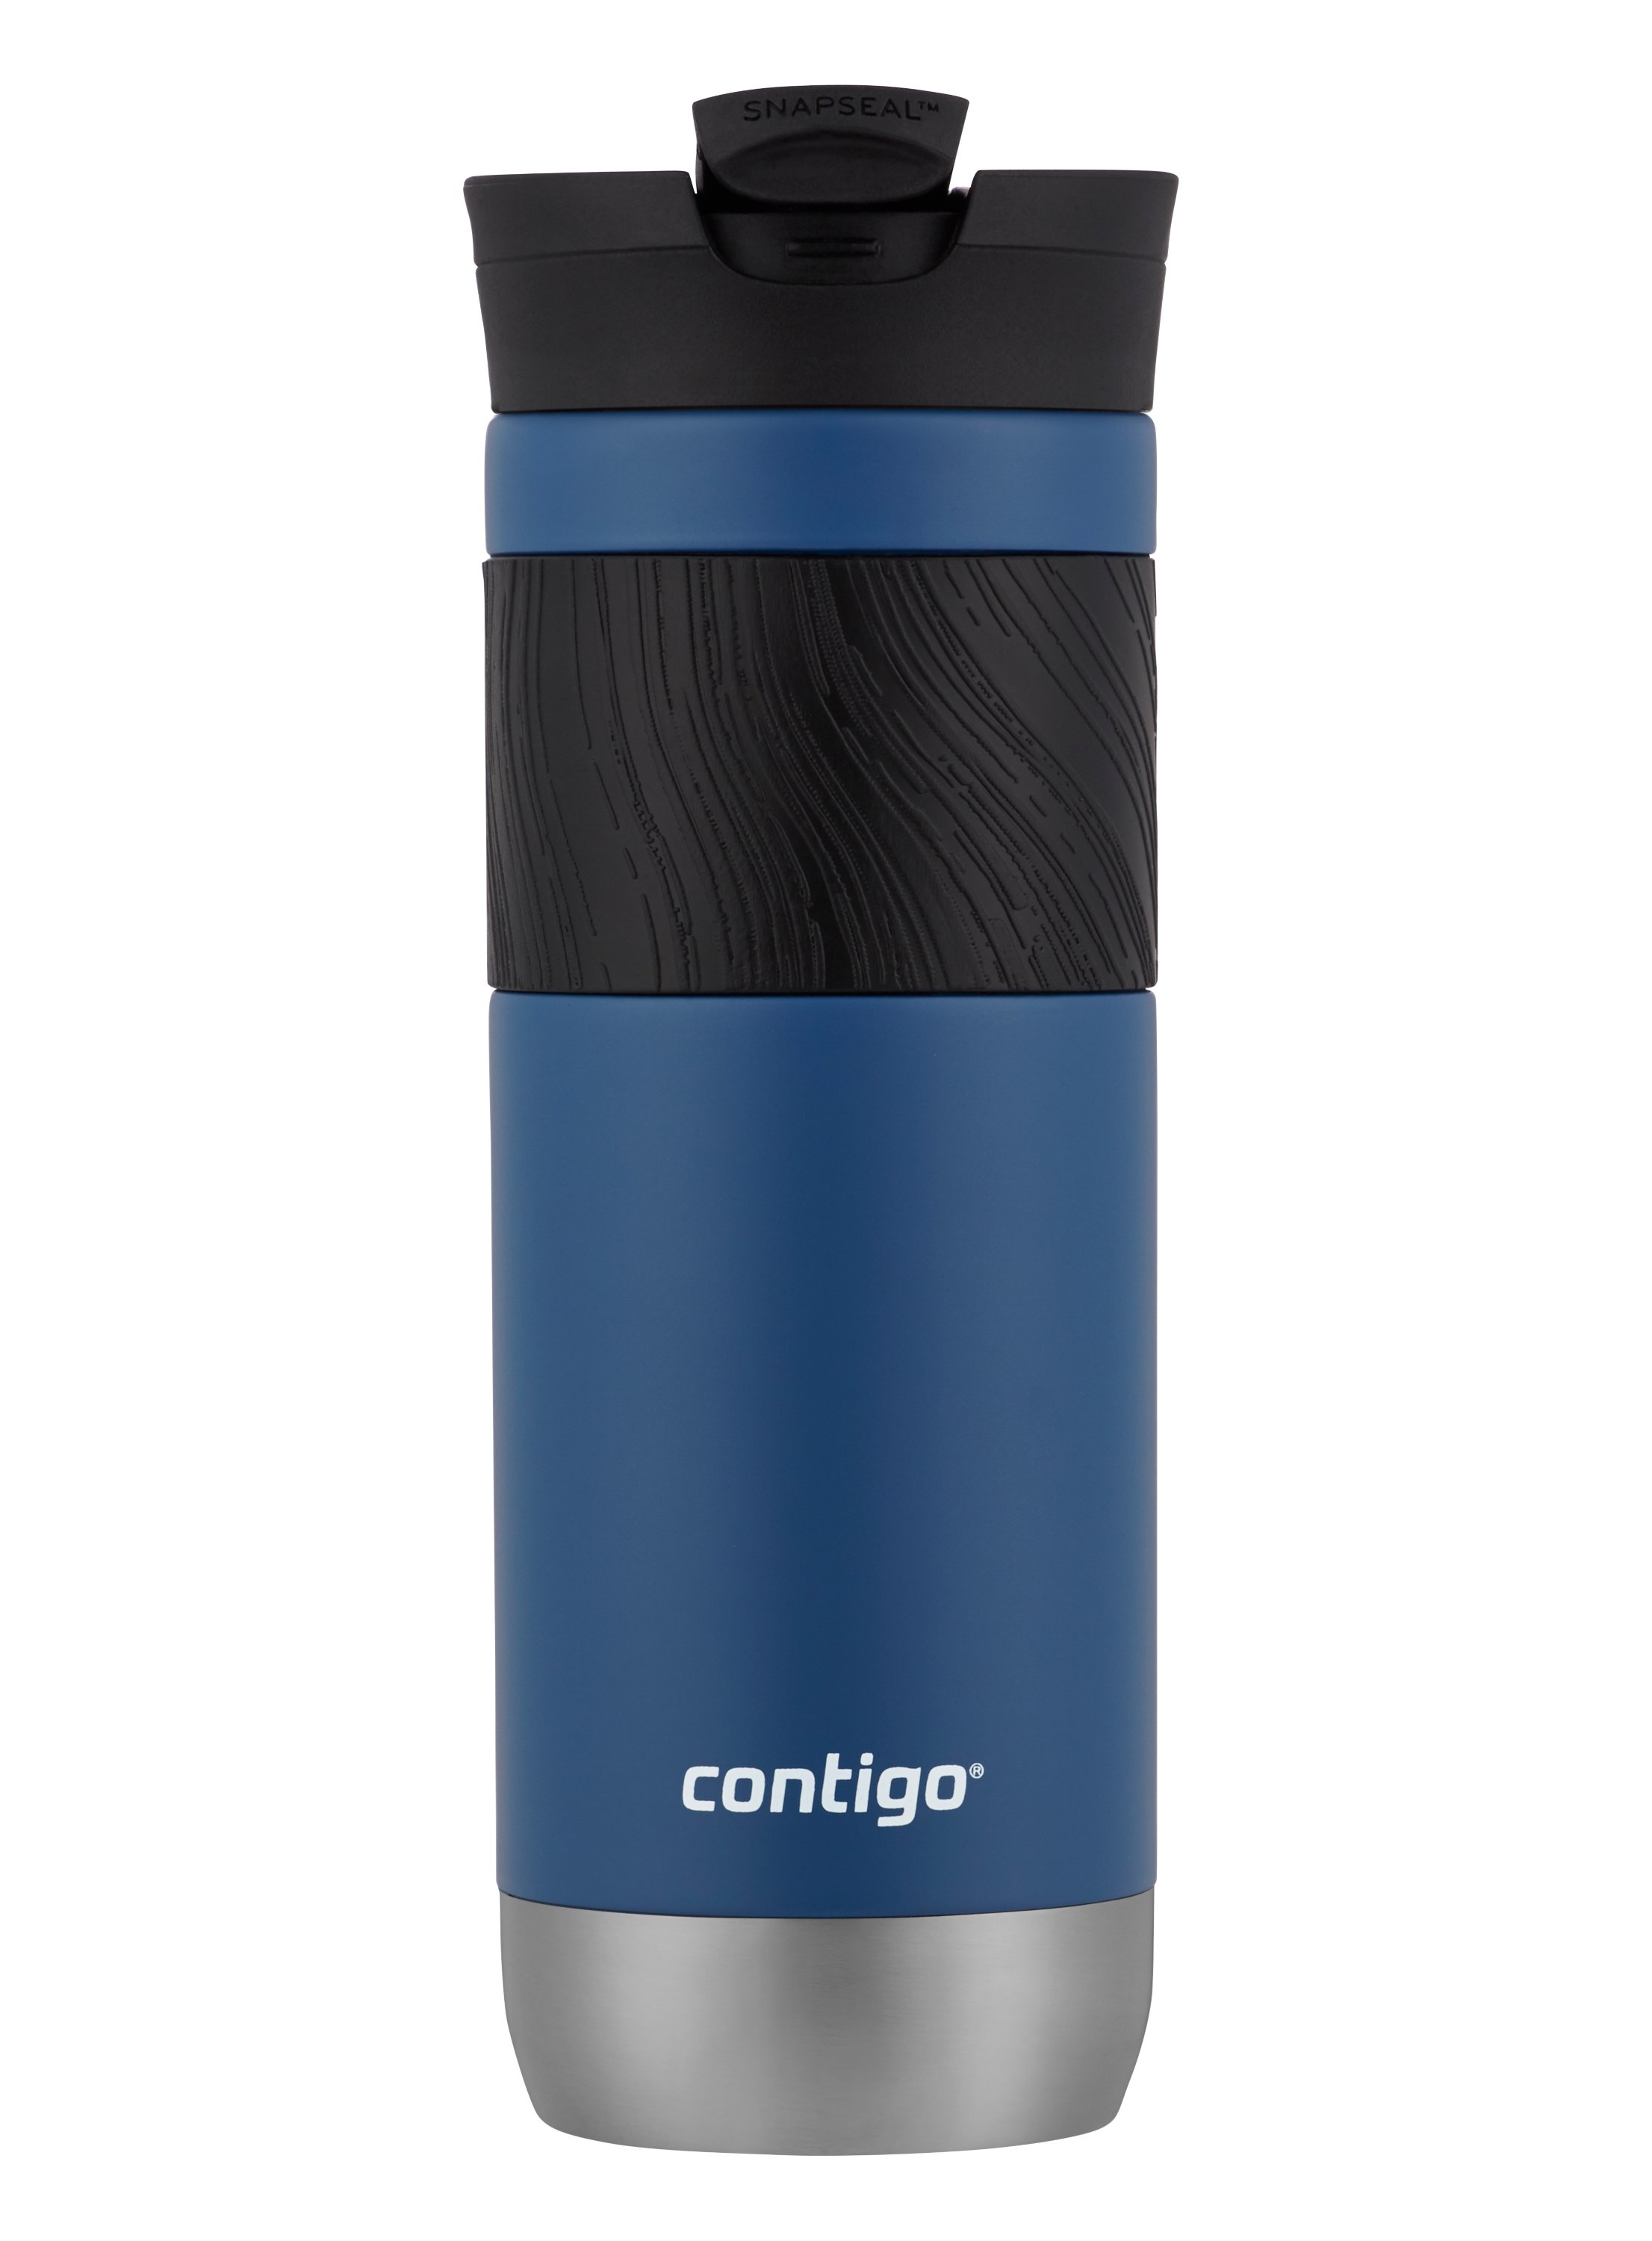  6 Pcs Seal Replacement for Contigo Snapseal Byron Travel Mug  16oz & 20oz, Silicone Sealing Ring Replacement for Contigo Snapseal  Replacement Part for Contigo Coffee Travel Tumbler(Mug not Include) : Beauty